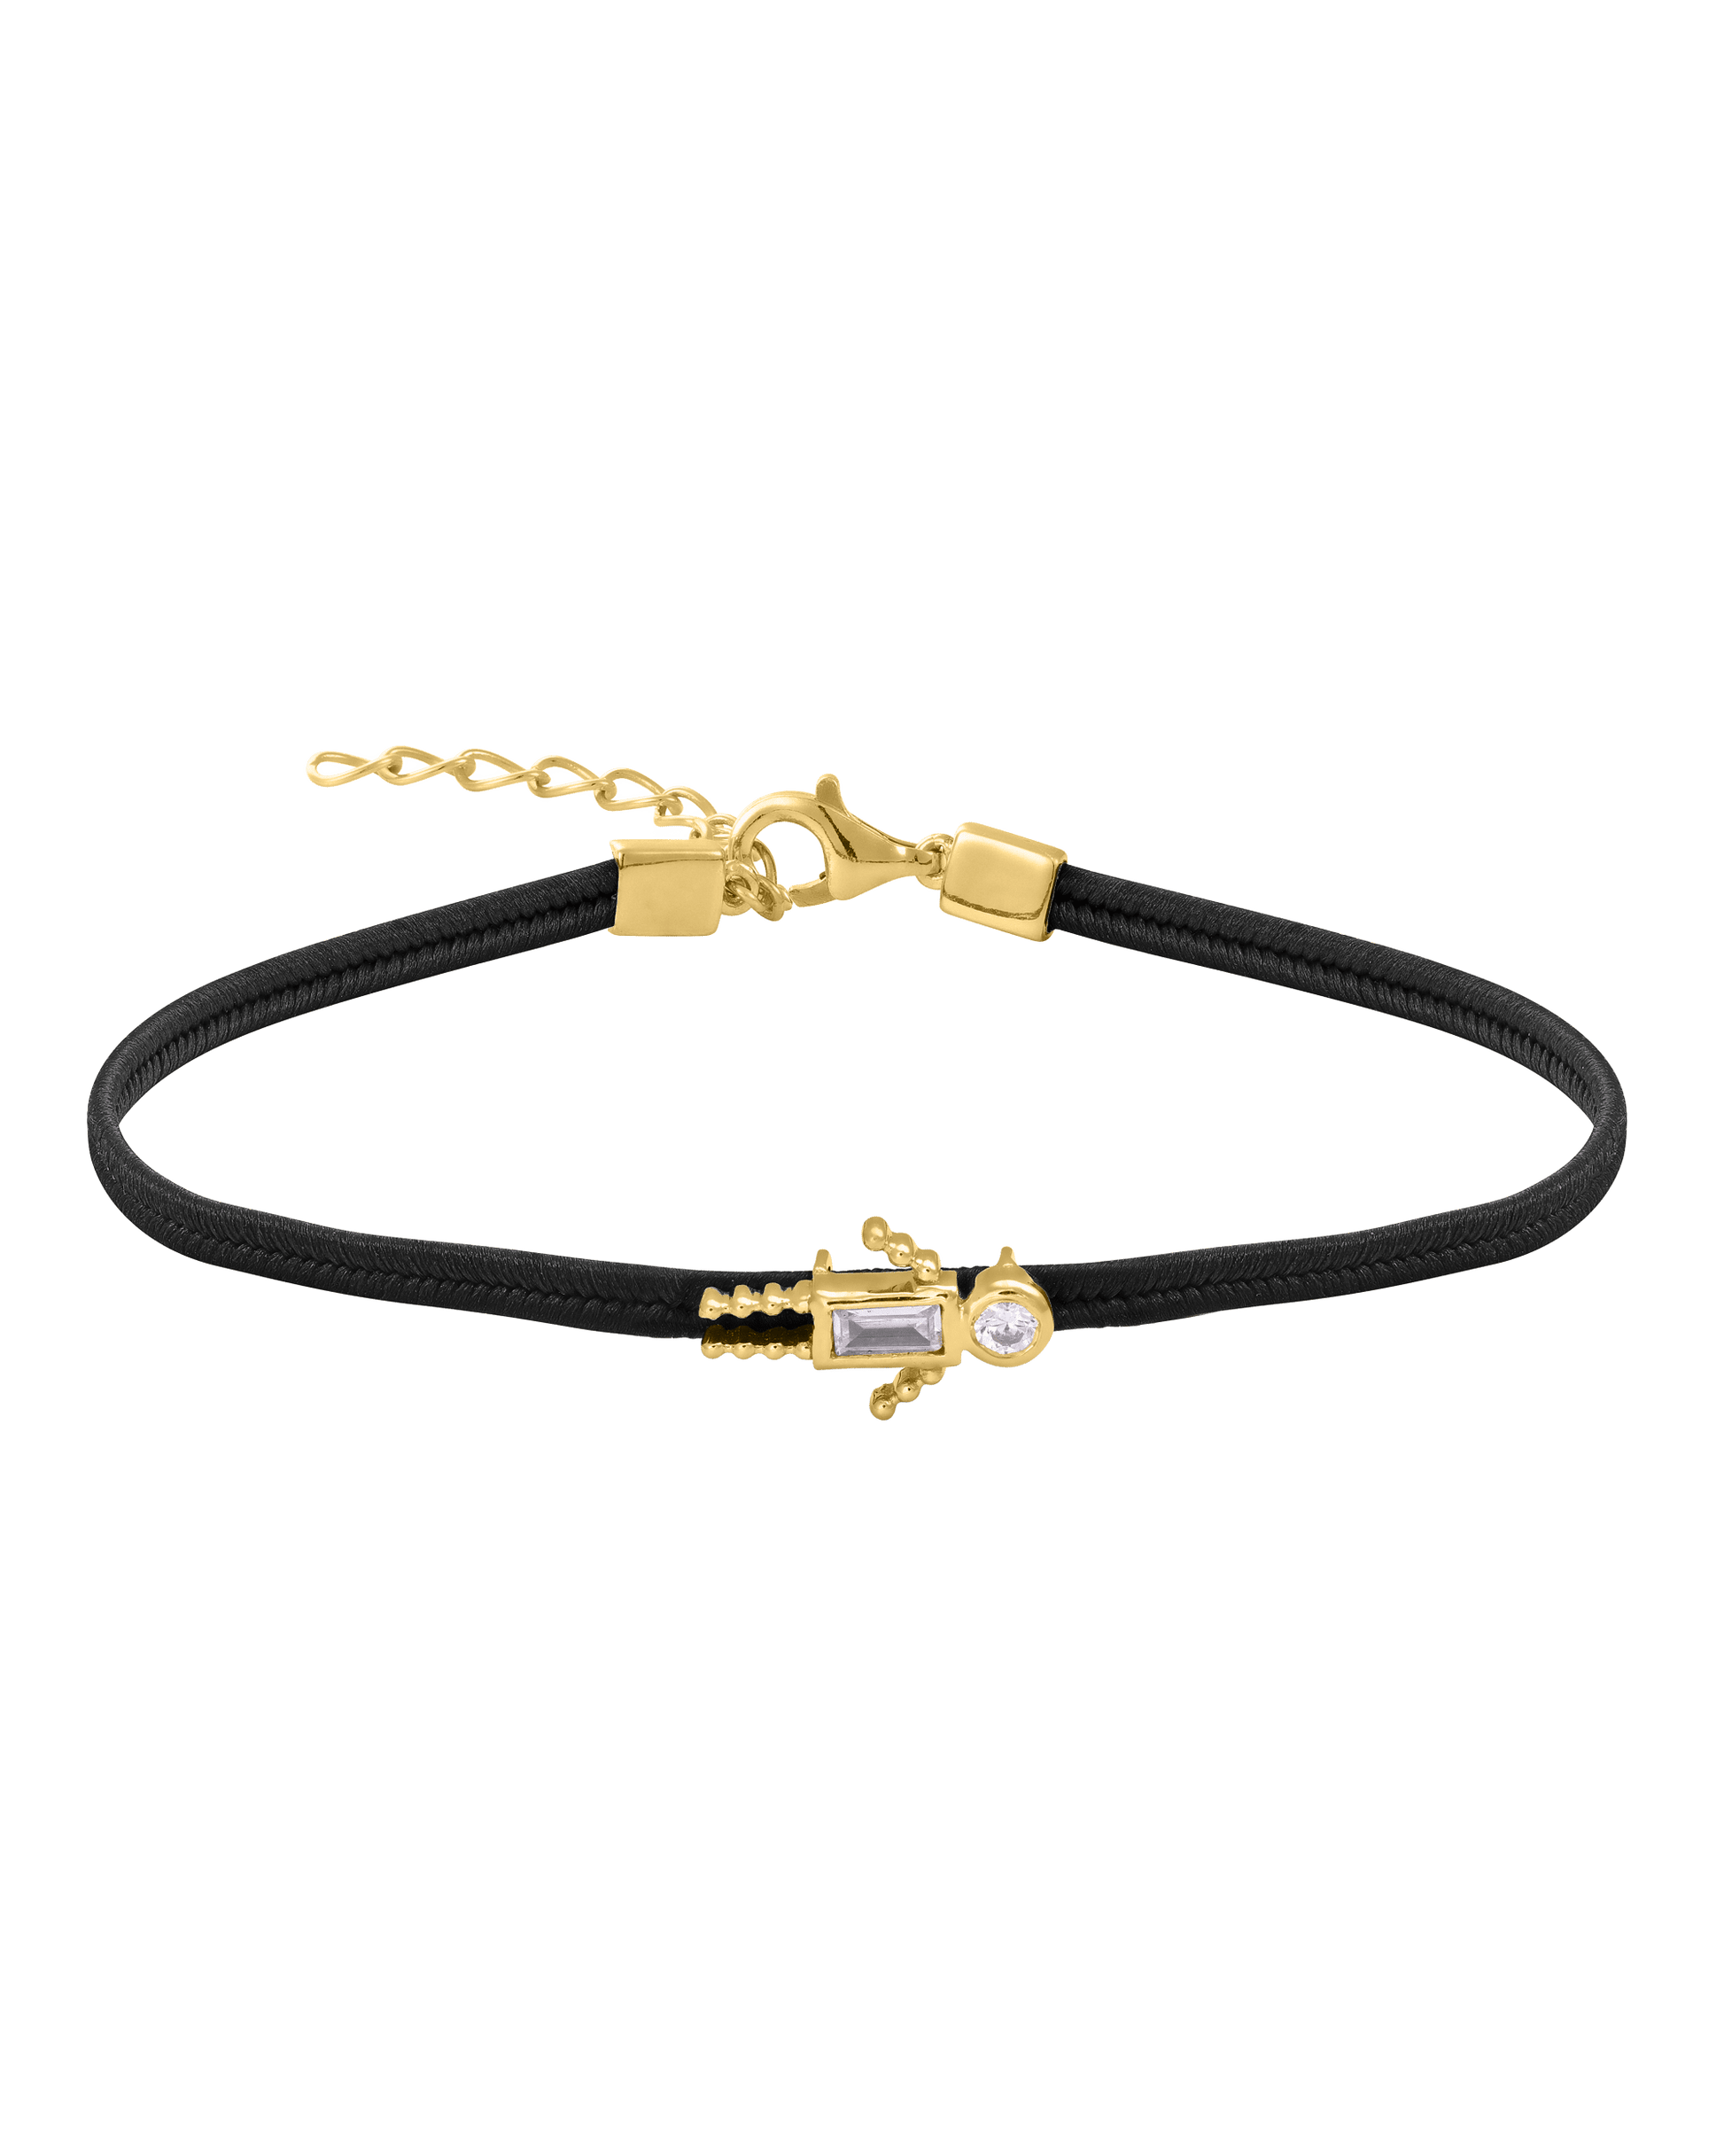 Mini Me Cord Bracelet - 18K Gold Vermeil Bracelets magal-dev Black 1 6"+1.5" extender